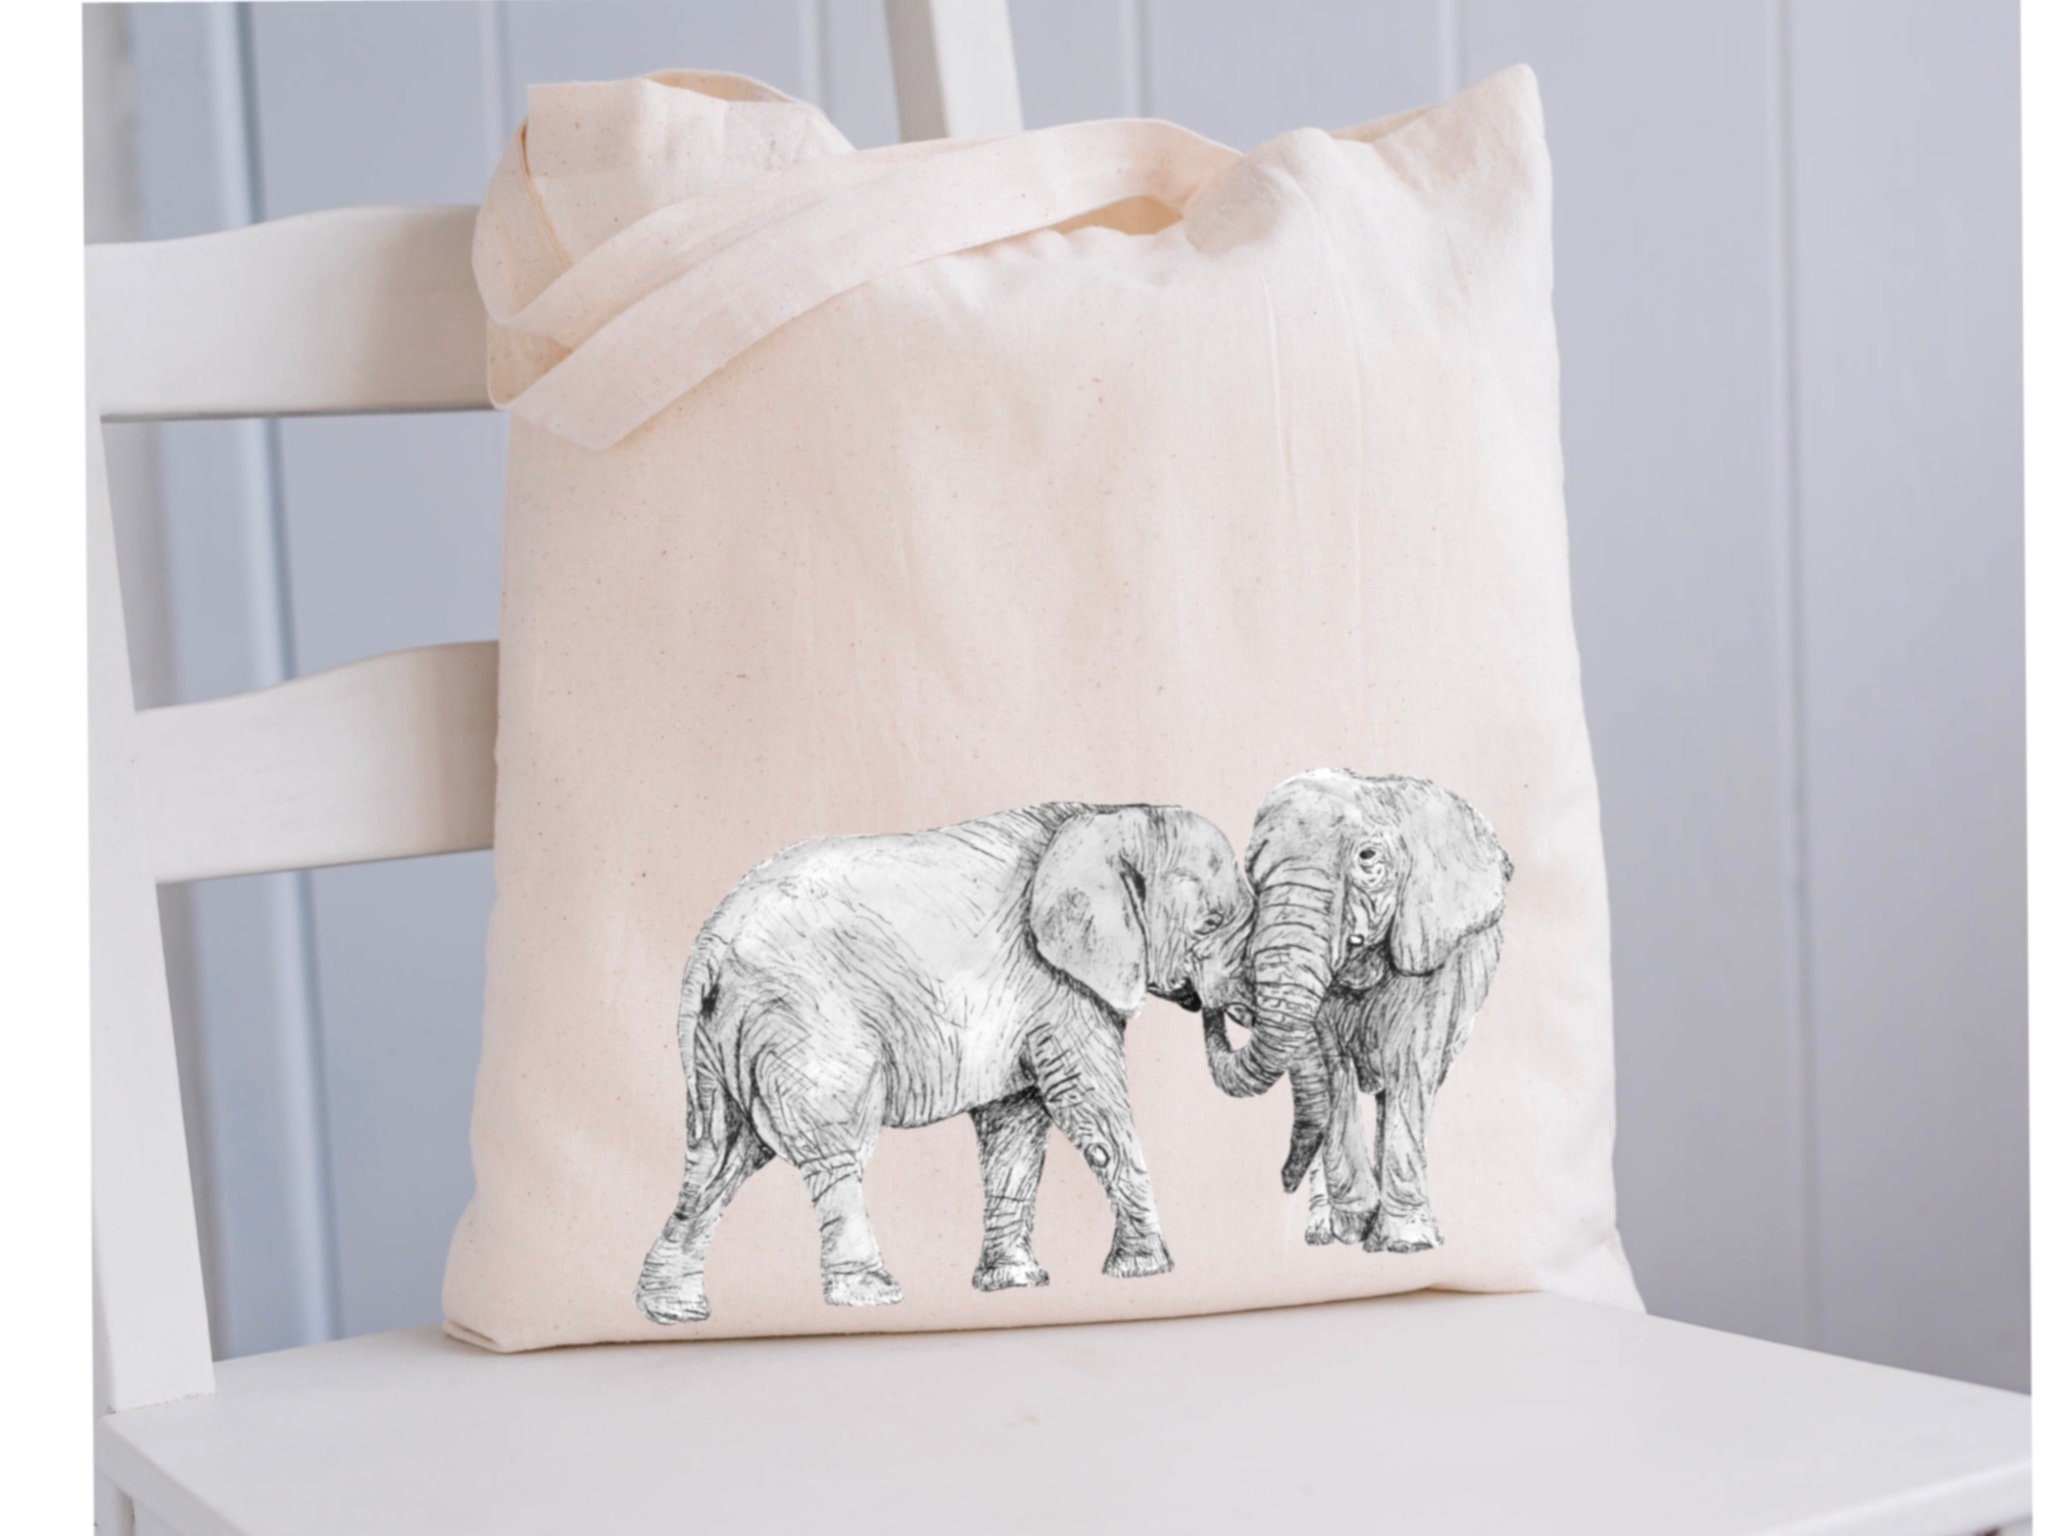 ELEPHANT~Floral~Large Shopping Bag~Pink handles/trim~Reusable Tote